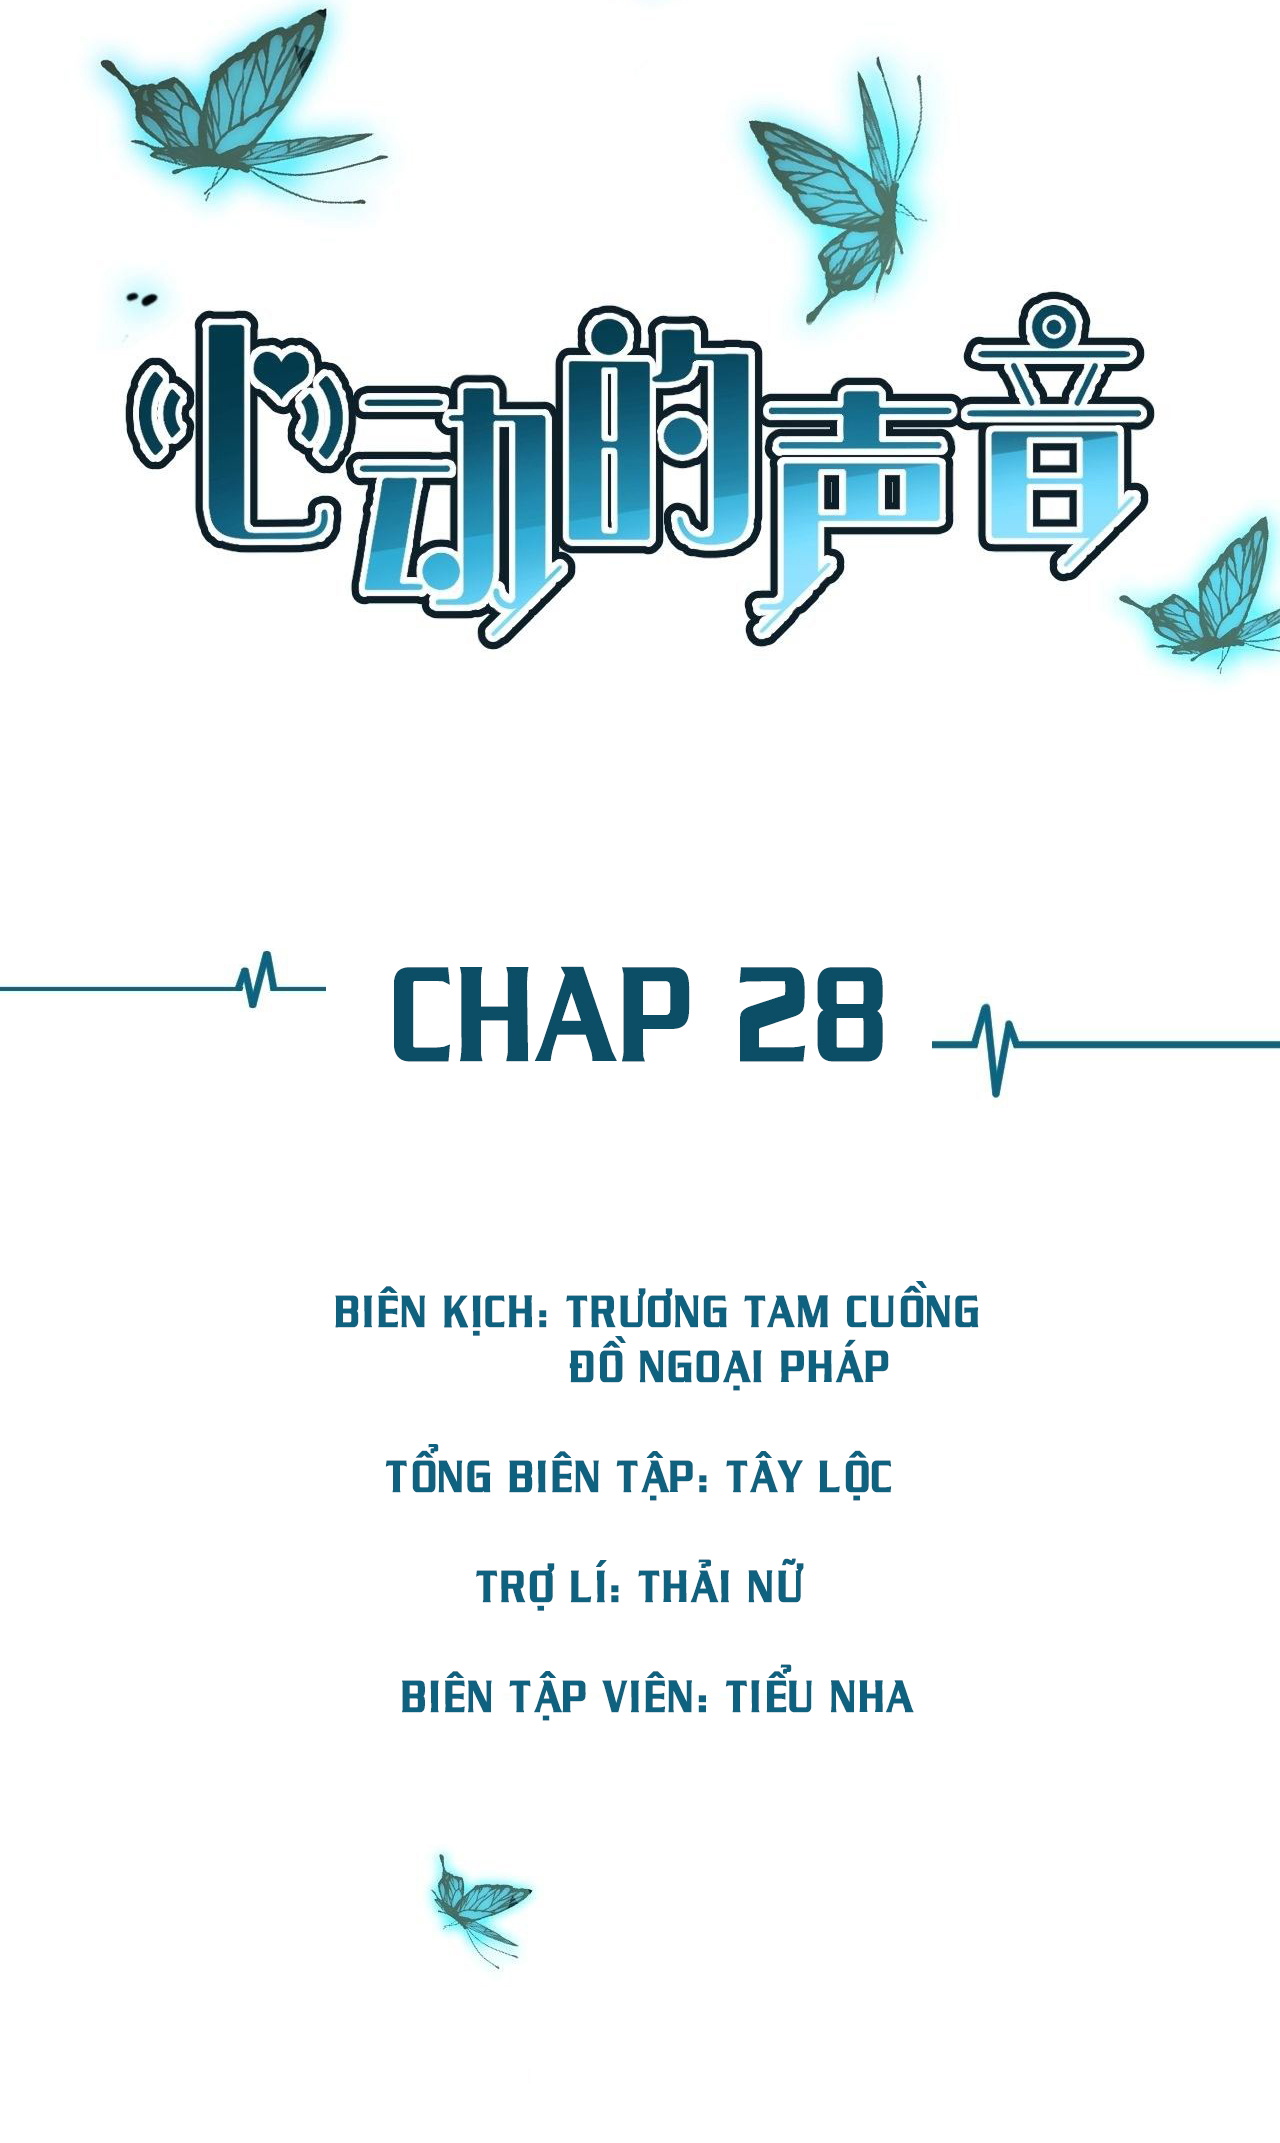 am-thanh-rung-dong-chap-28-1